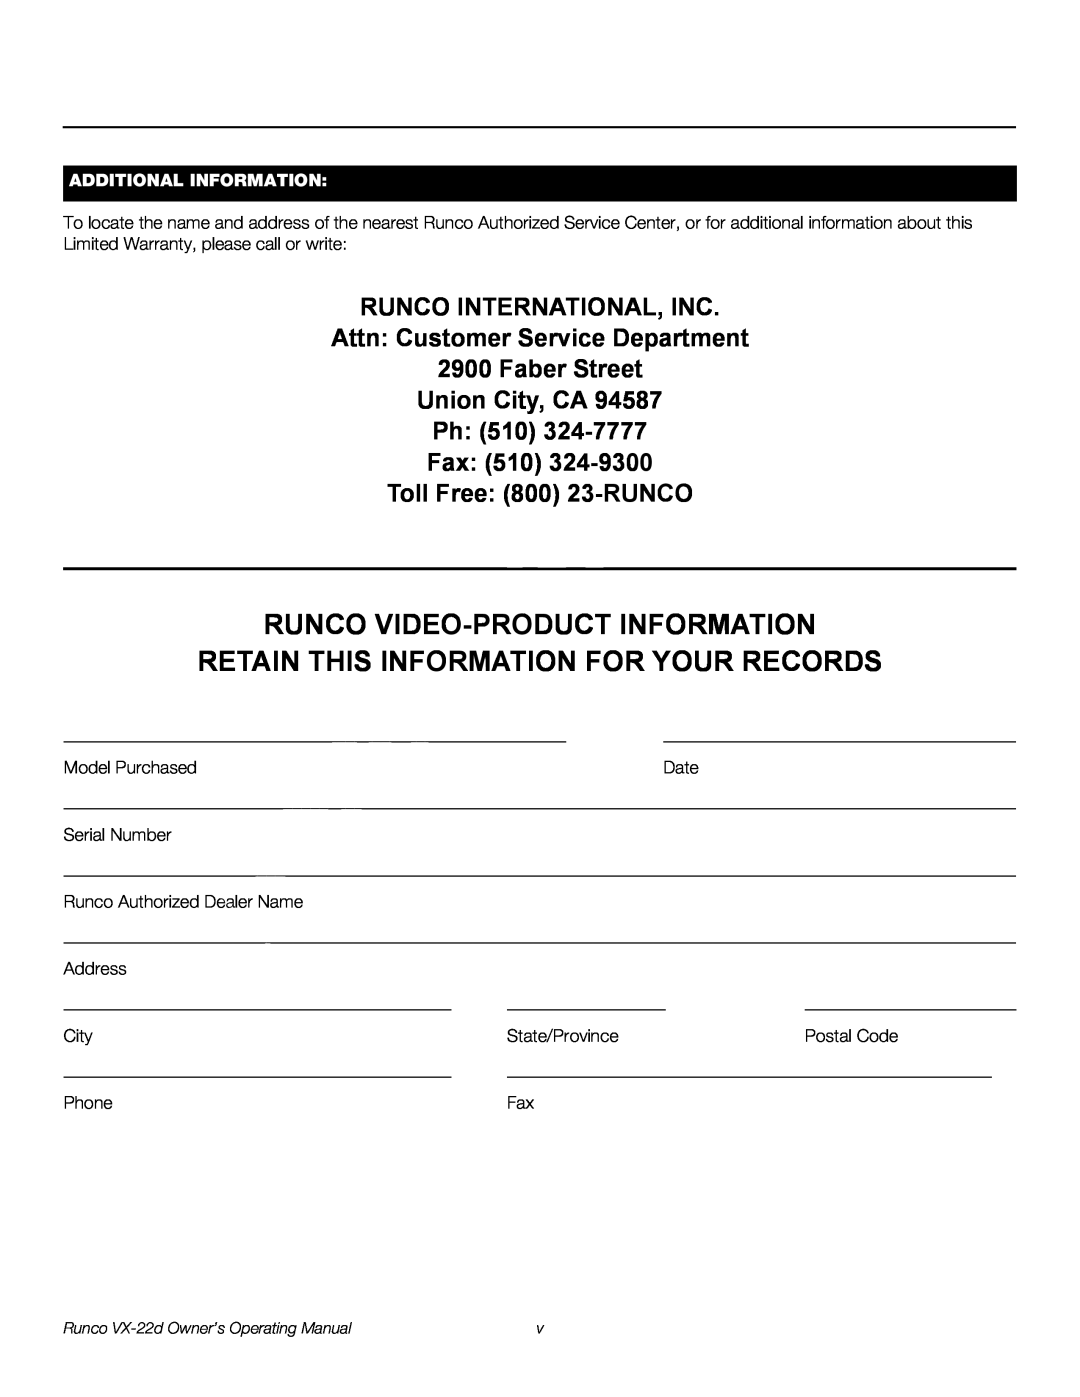 Runco VX-22D manual RUNCO INTERNATIONAL, INC Attn Customer Service Department, Faber Street Union City, CA Ph 510 Fax 510 